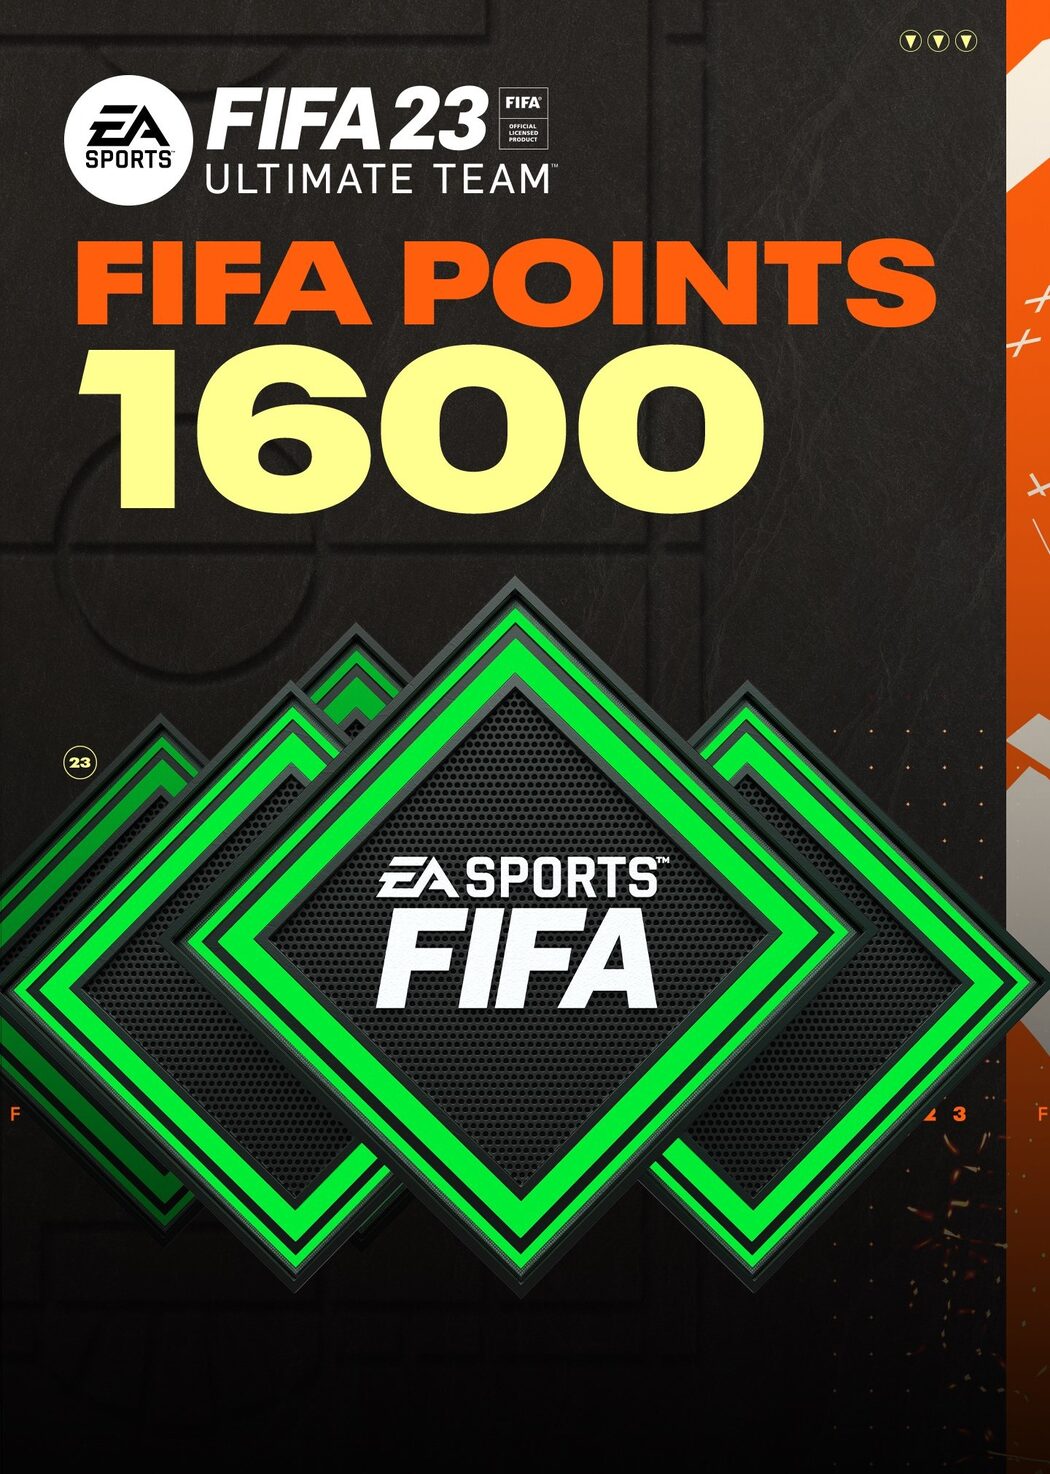 FIFA 23 (PC) EA App / Origin Online CD License Key